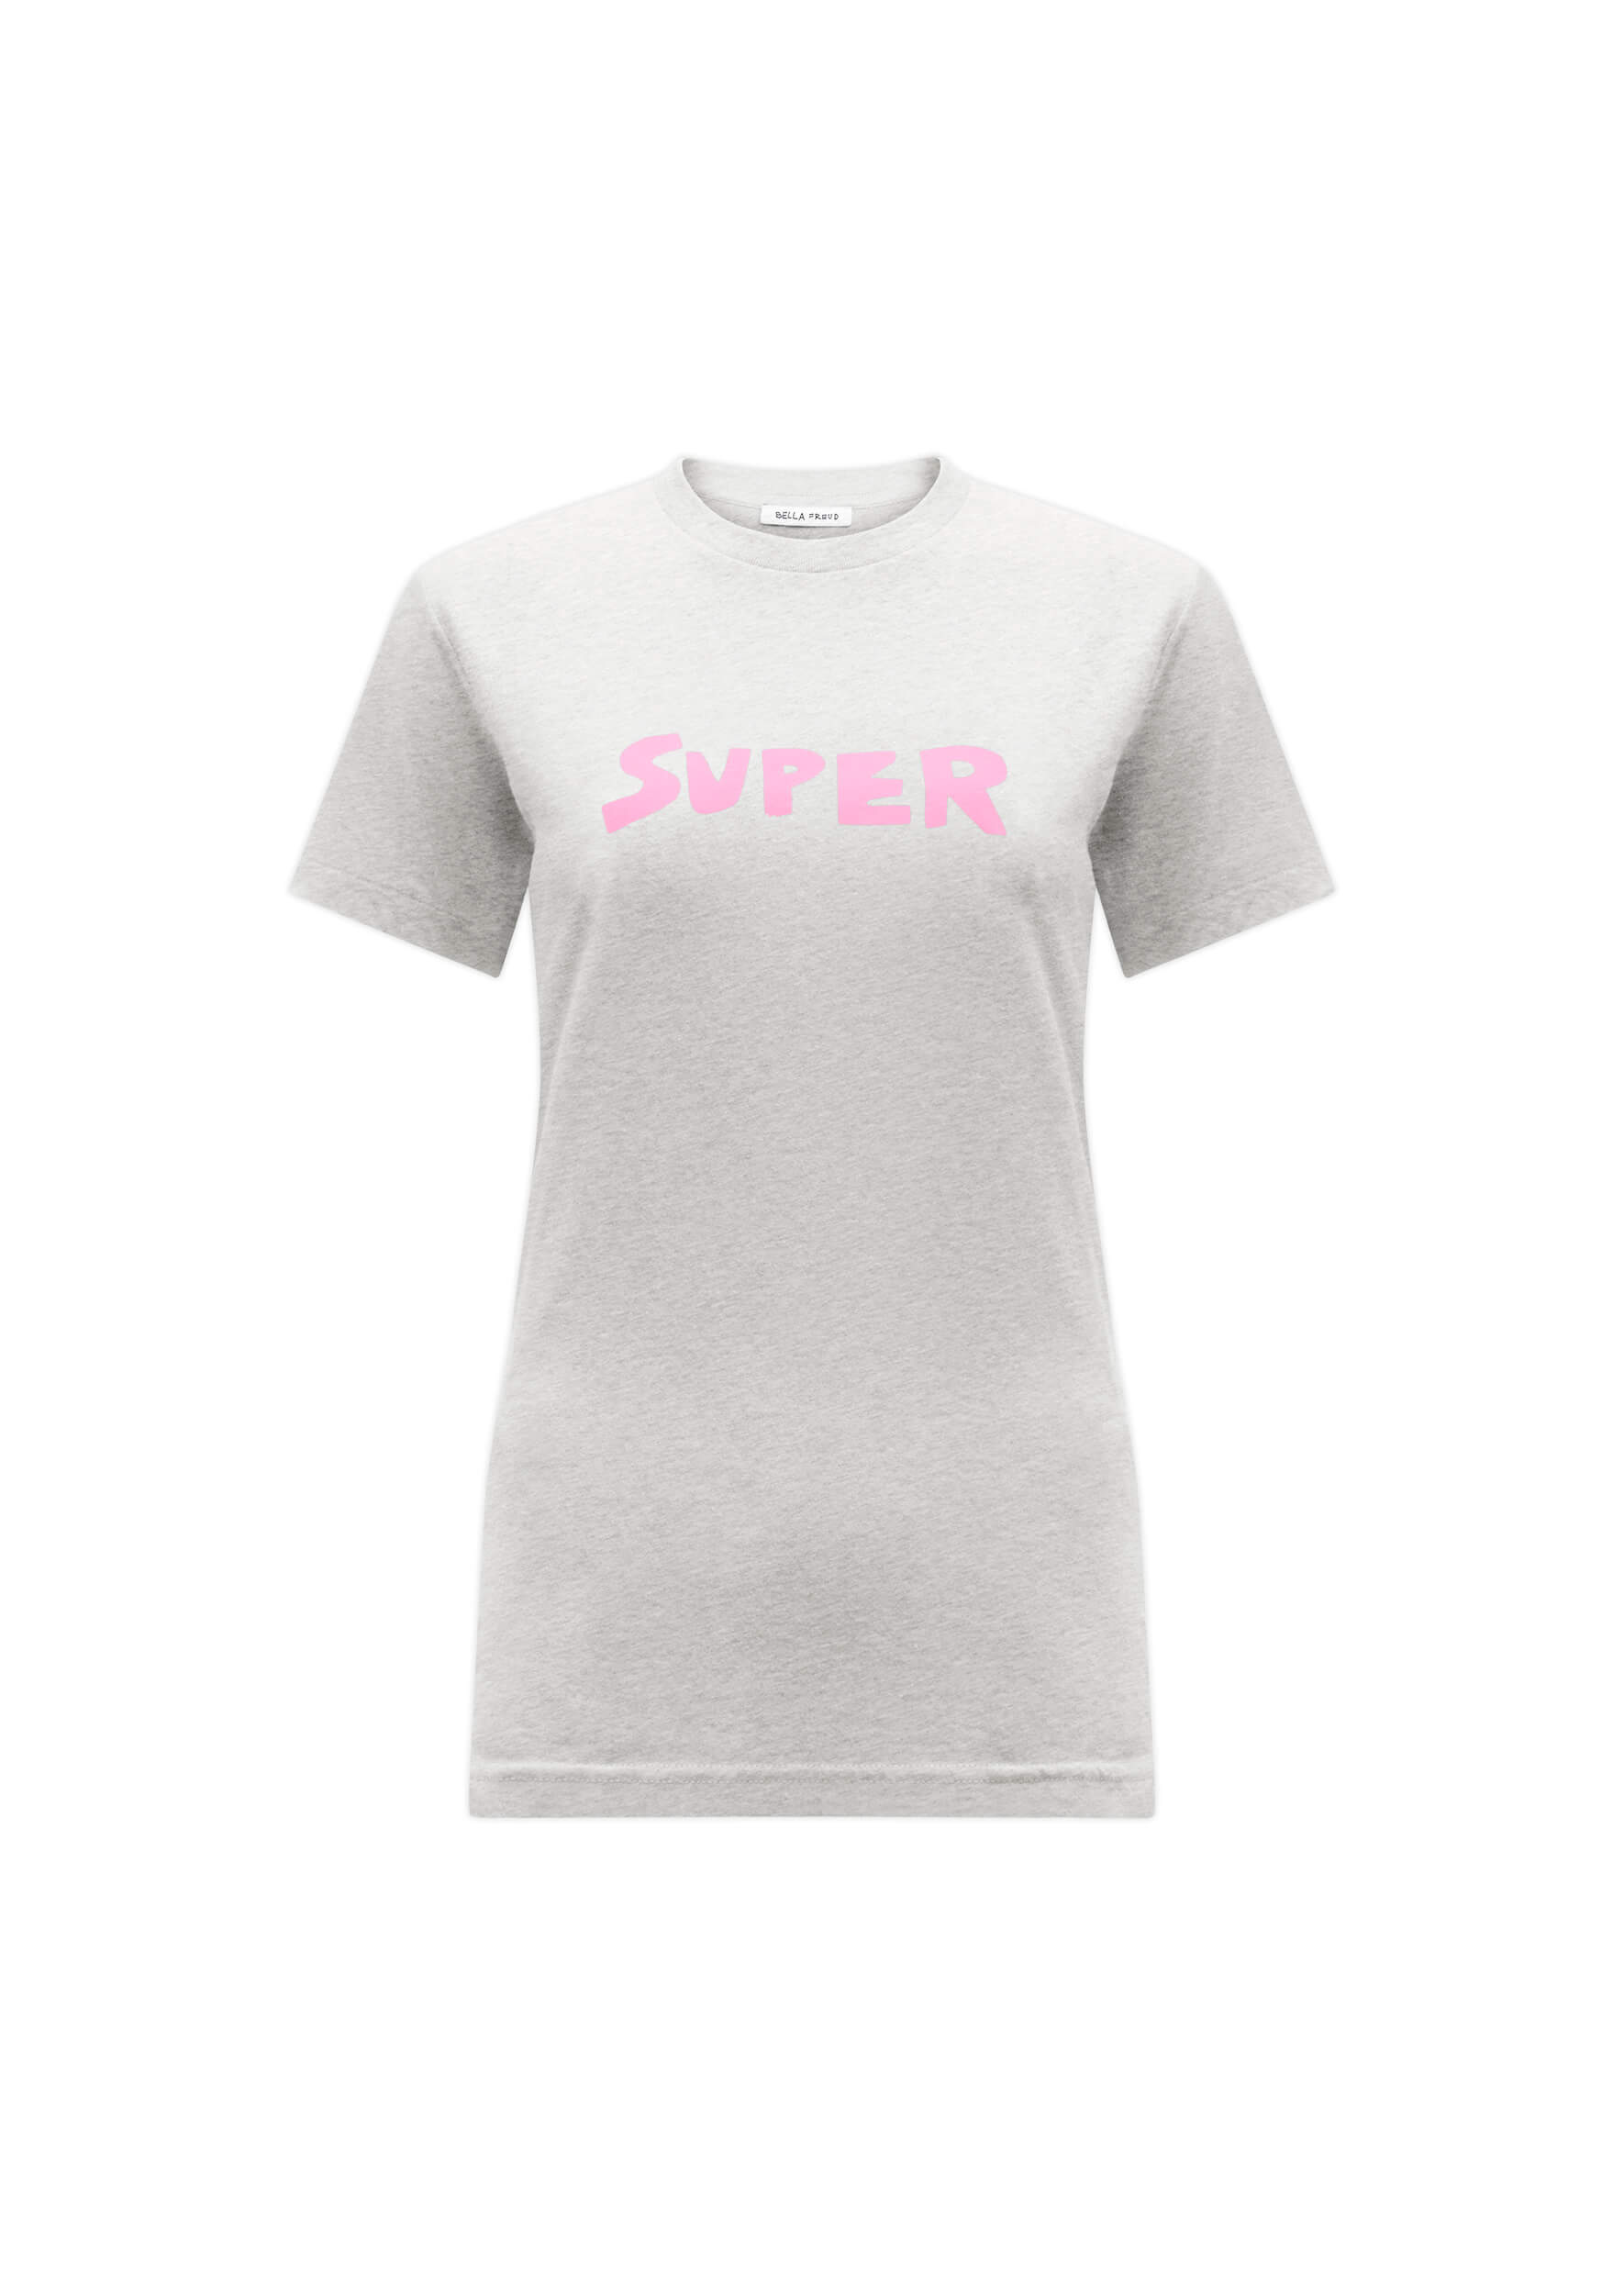 BF Super T shirt in grey marl